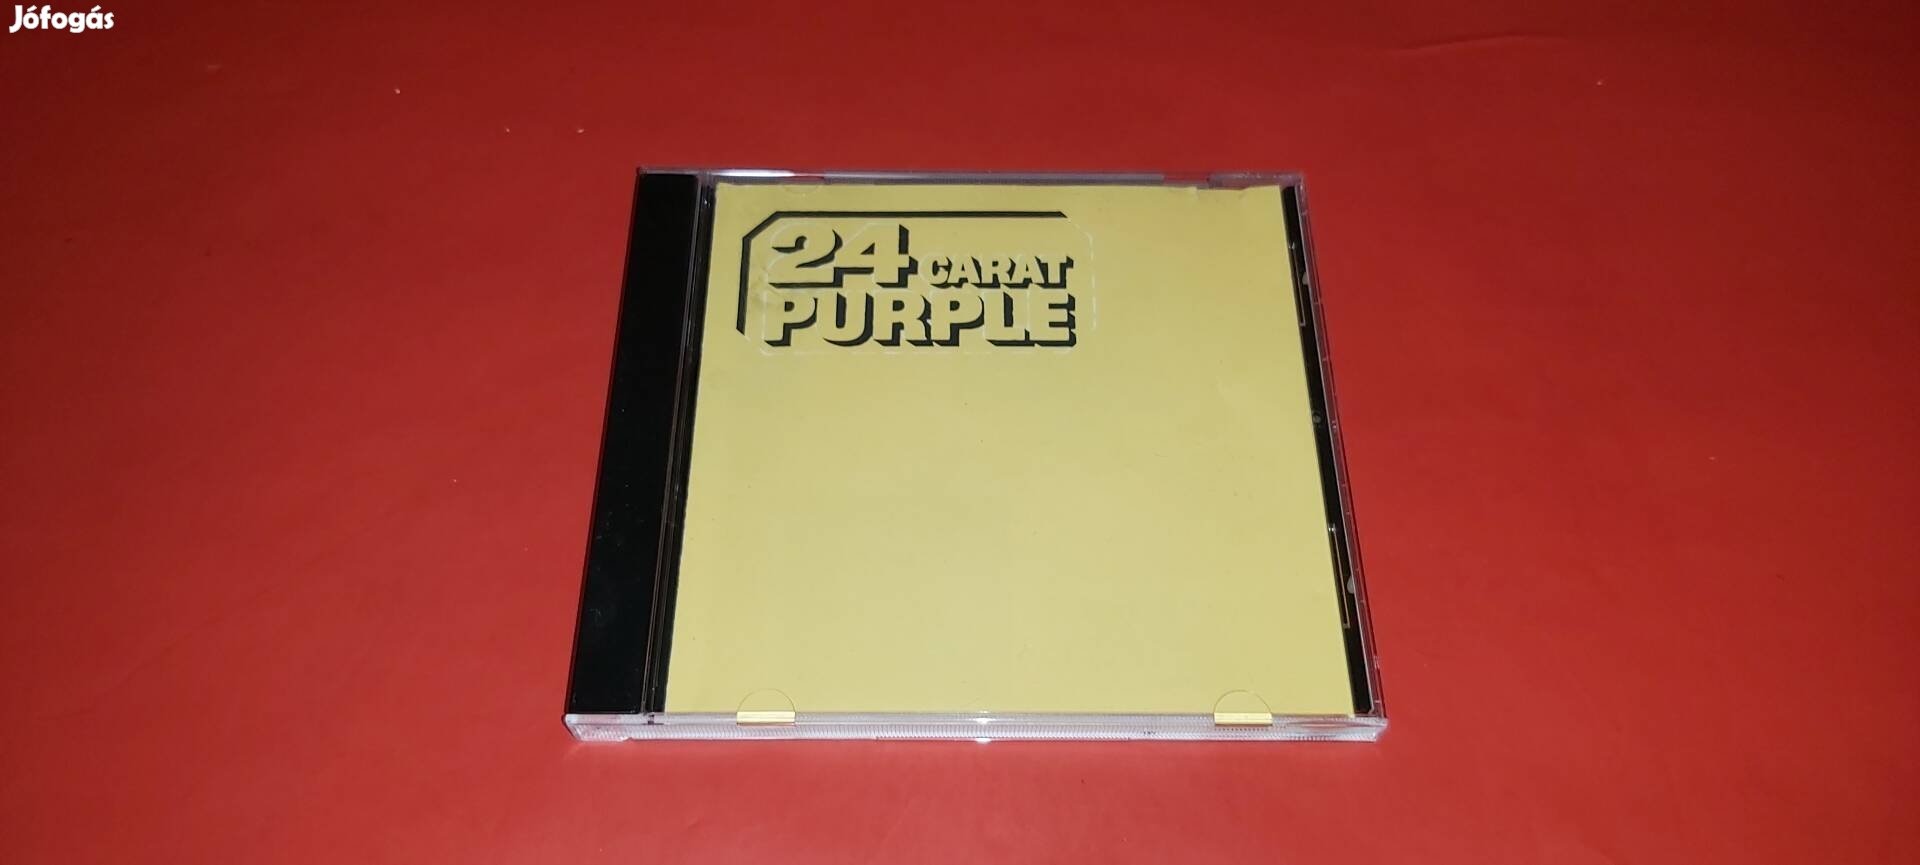 Deep Purple 24 Carate Purple Cd U.K.